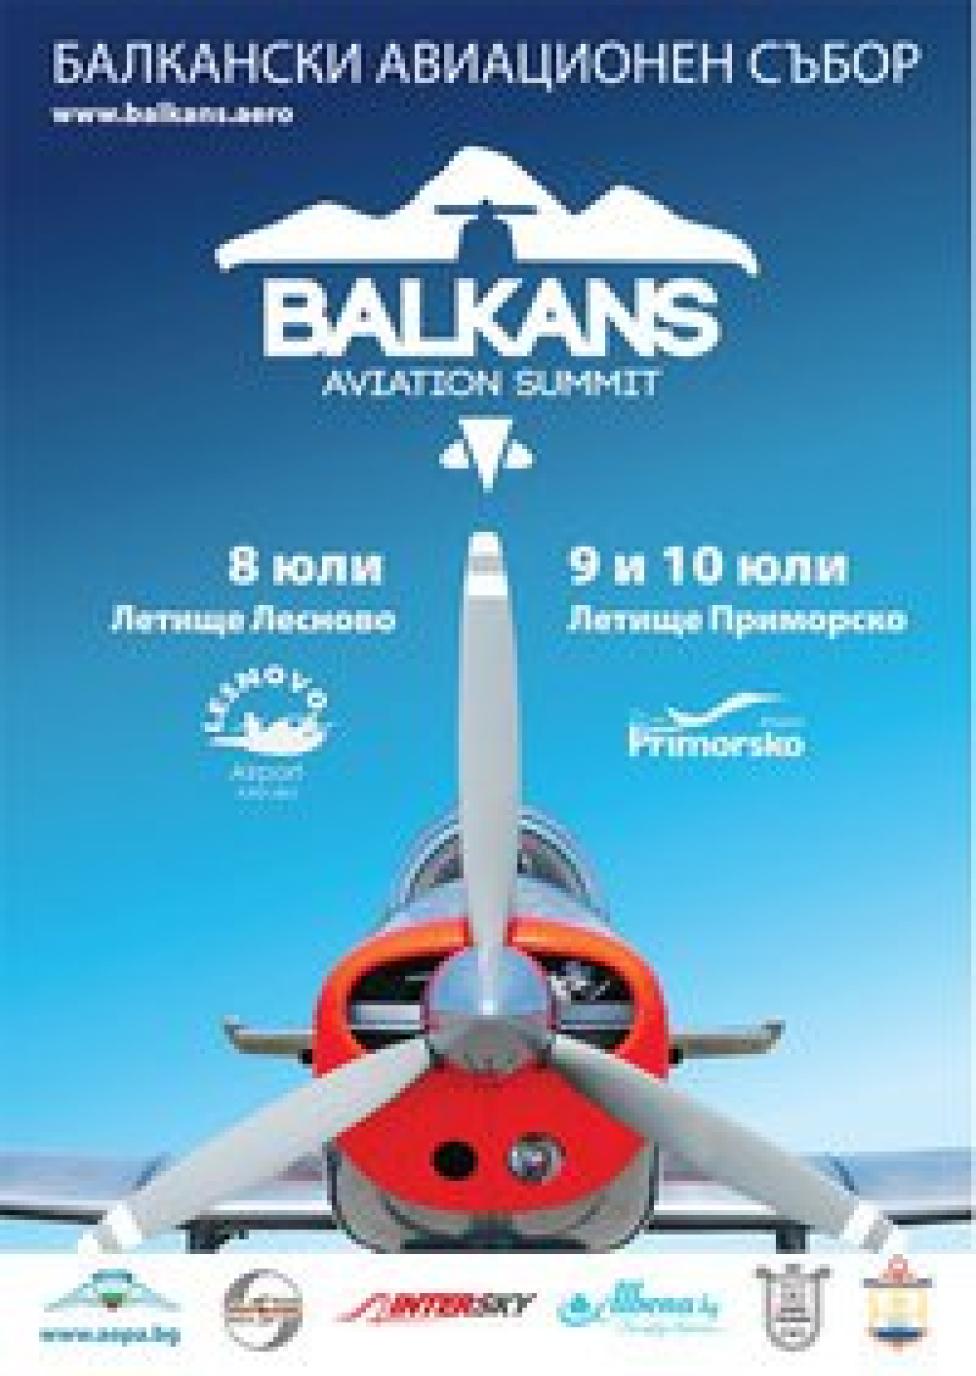 Balkans Aviation Summit 